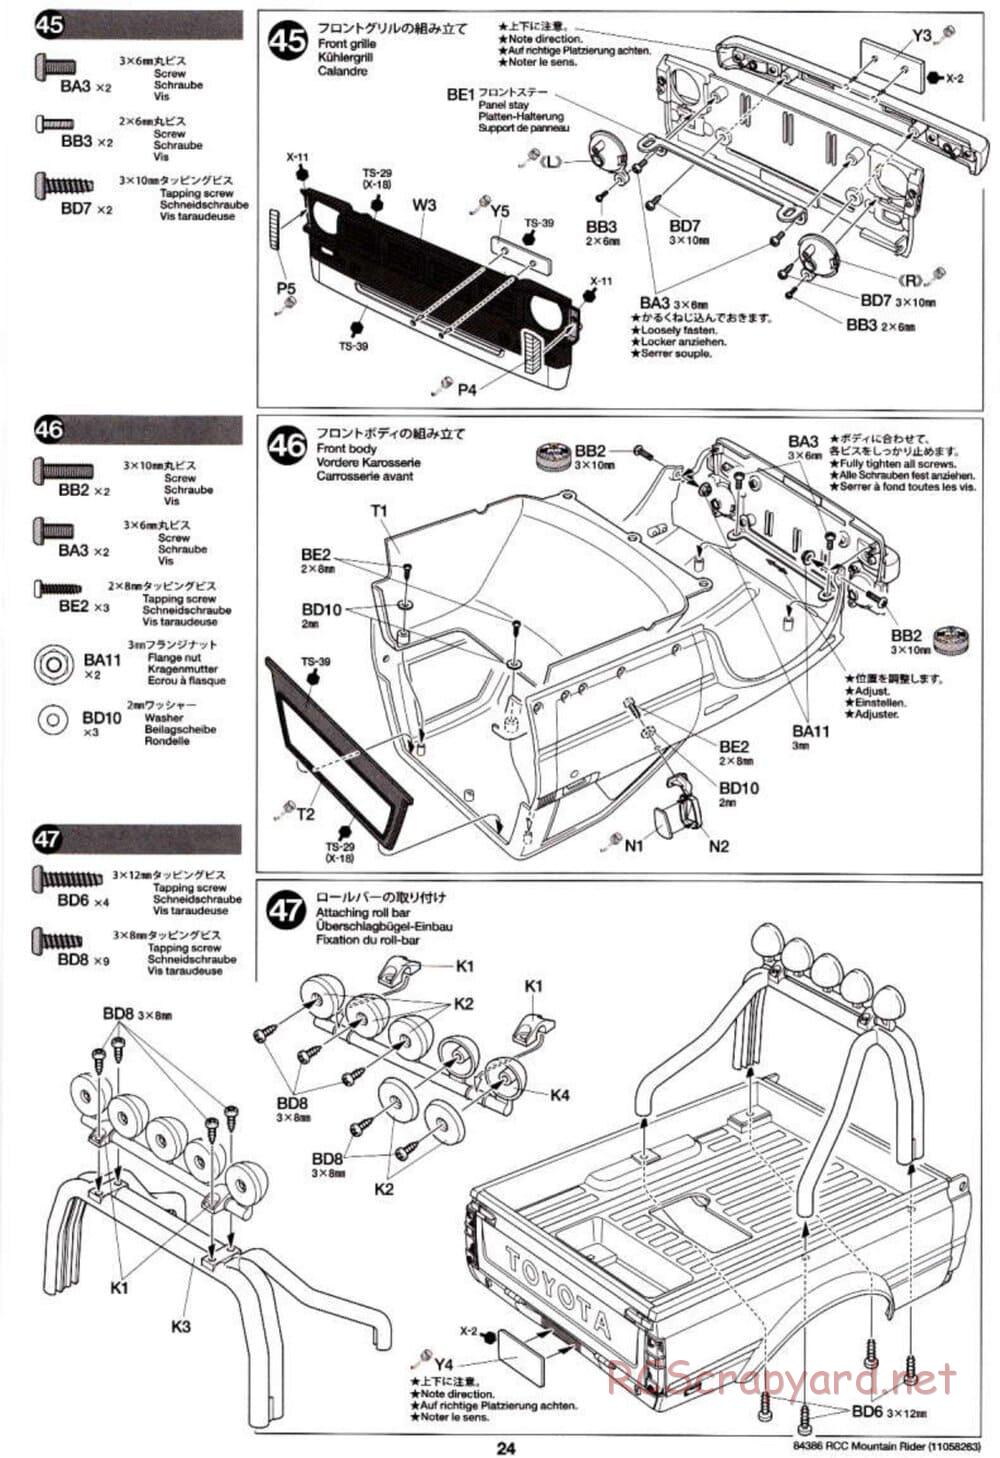 Tamiya - Toyota 4x4 Pick-Up Mountain Rider Chassis - Manual - Page 24